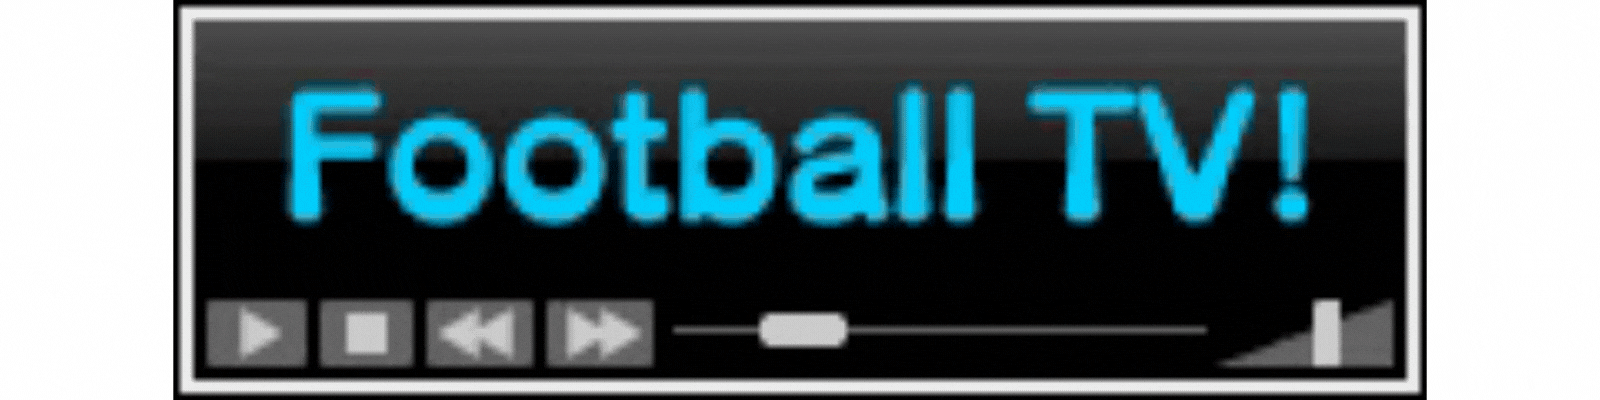 FOOTBALL TV